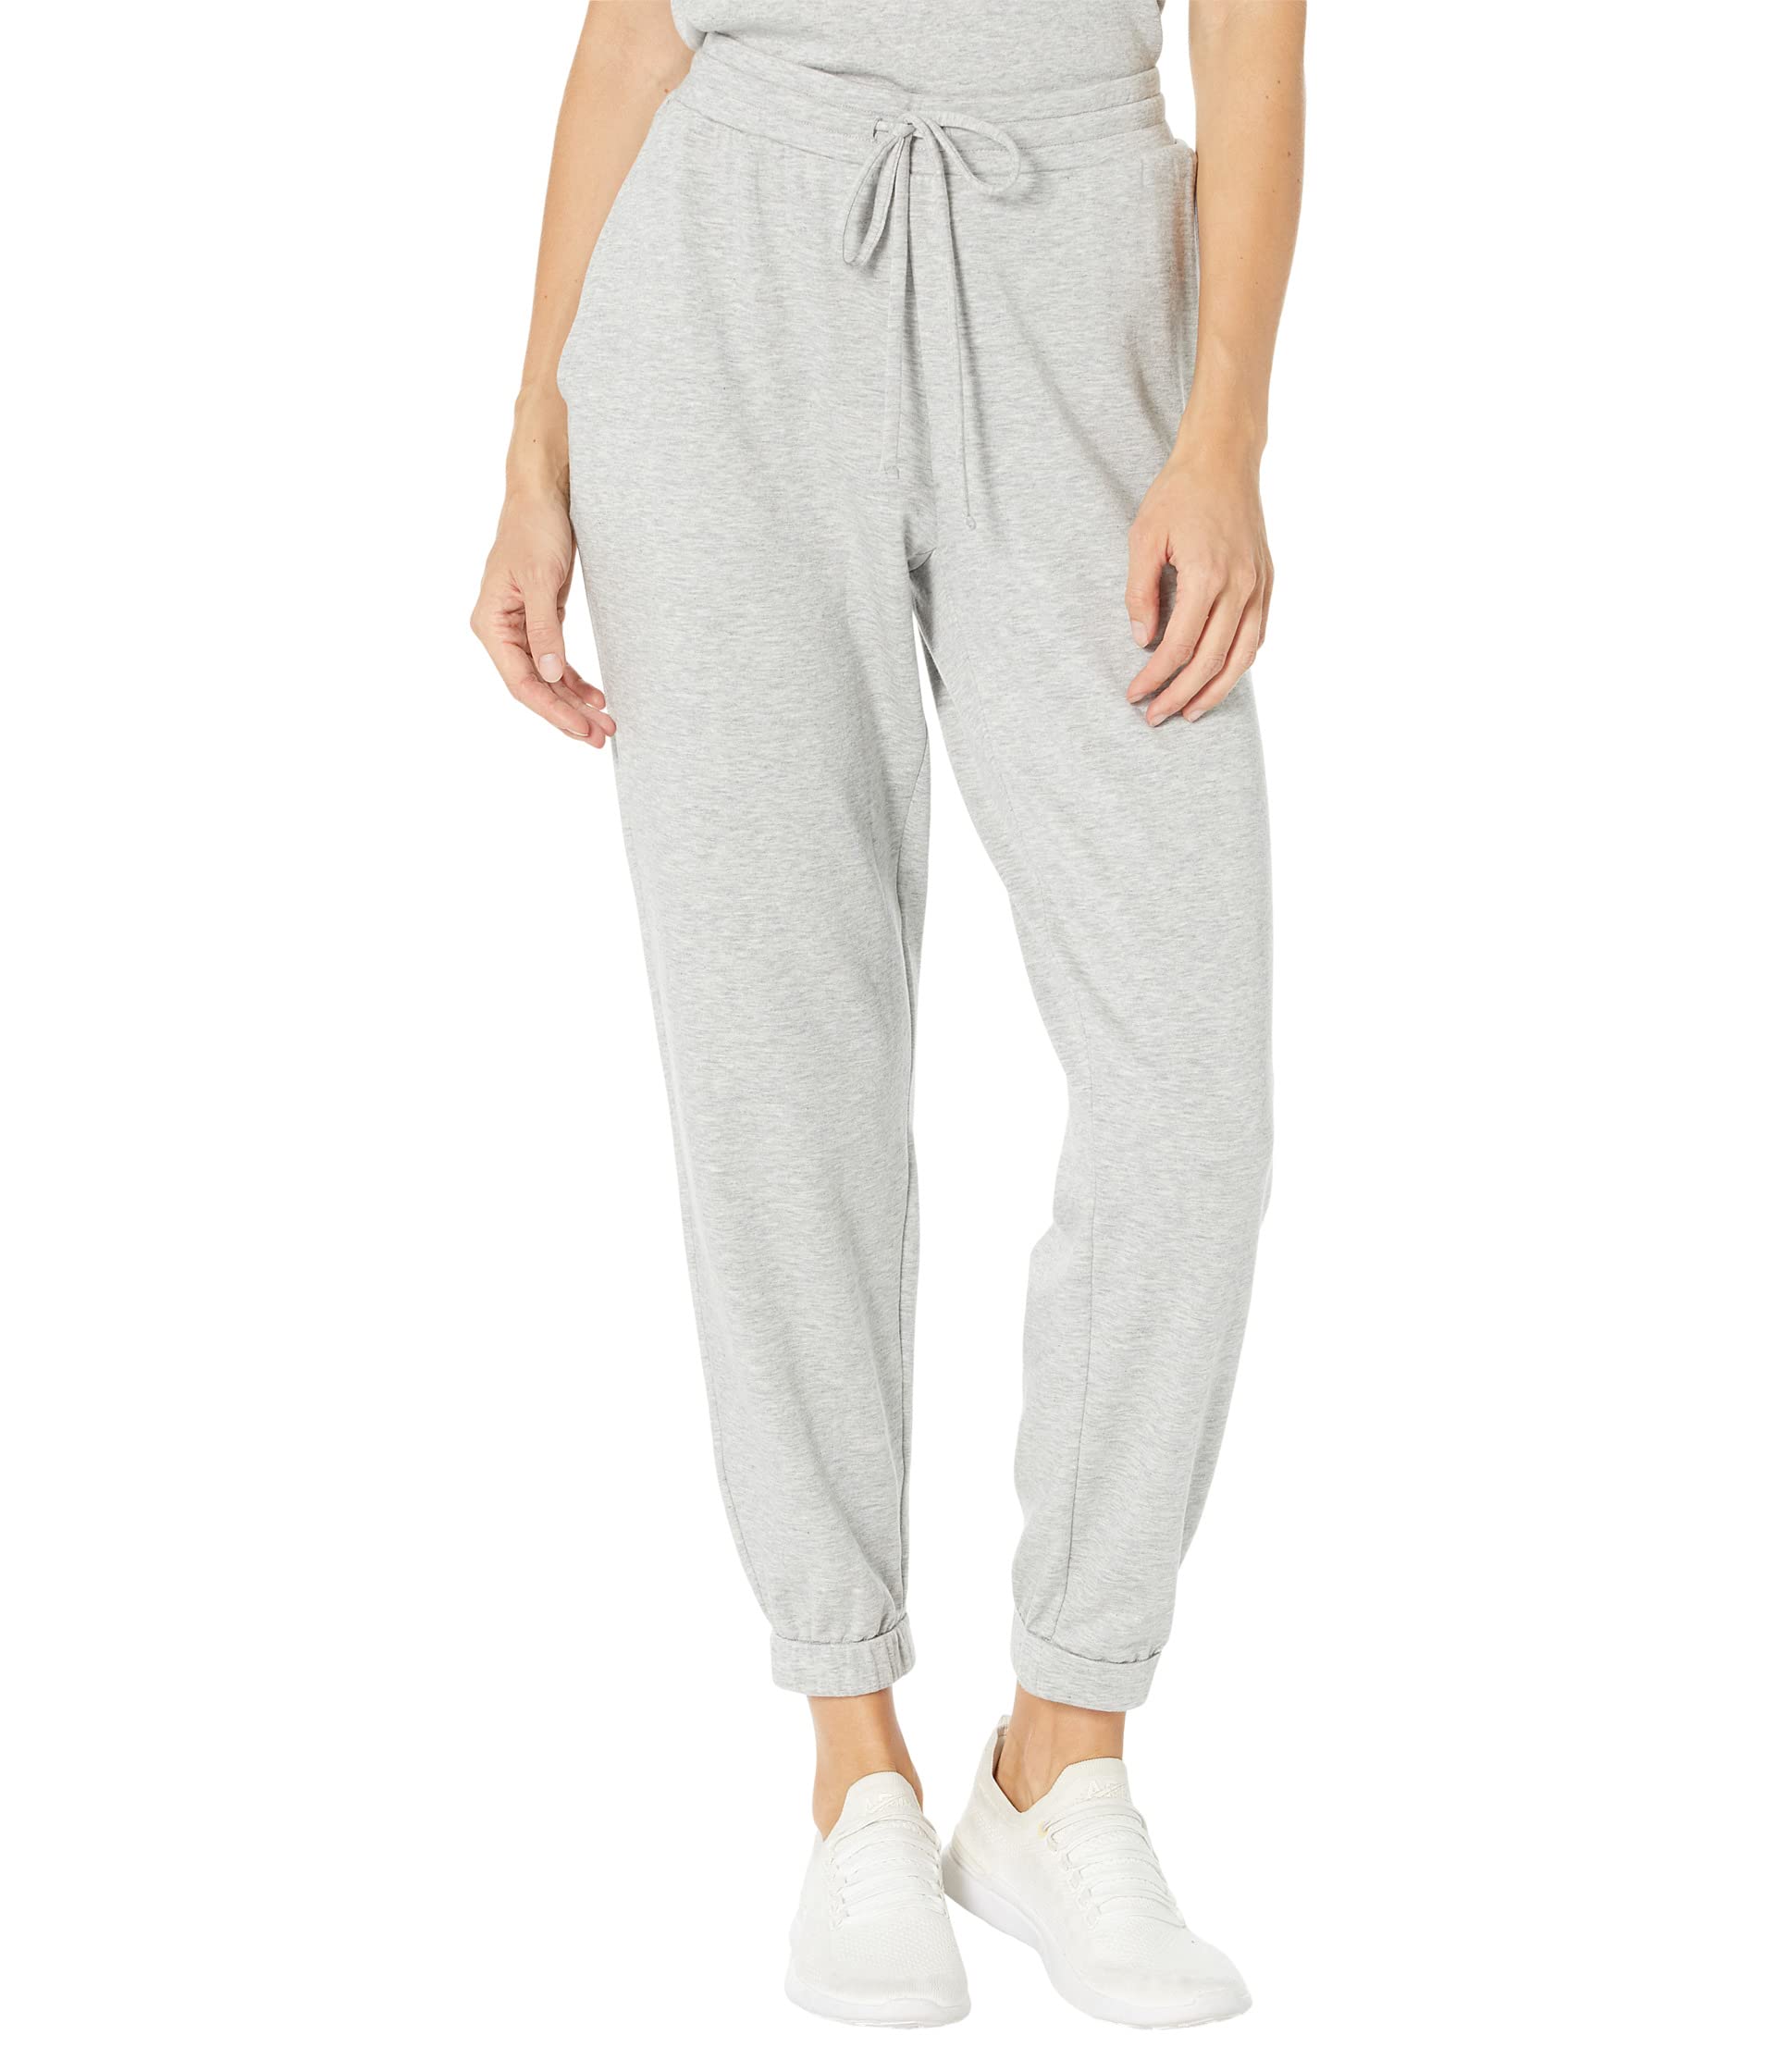 Спортивные штаны Eileen Fisher, Ankle Track Pants in Tencel Organic Cotton Fleece